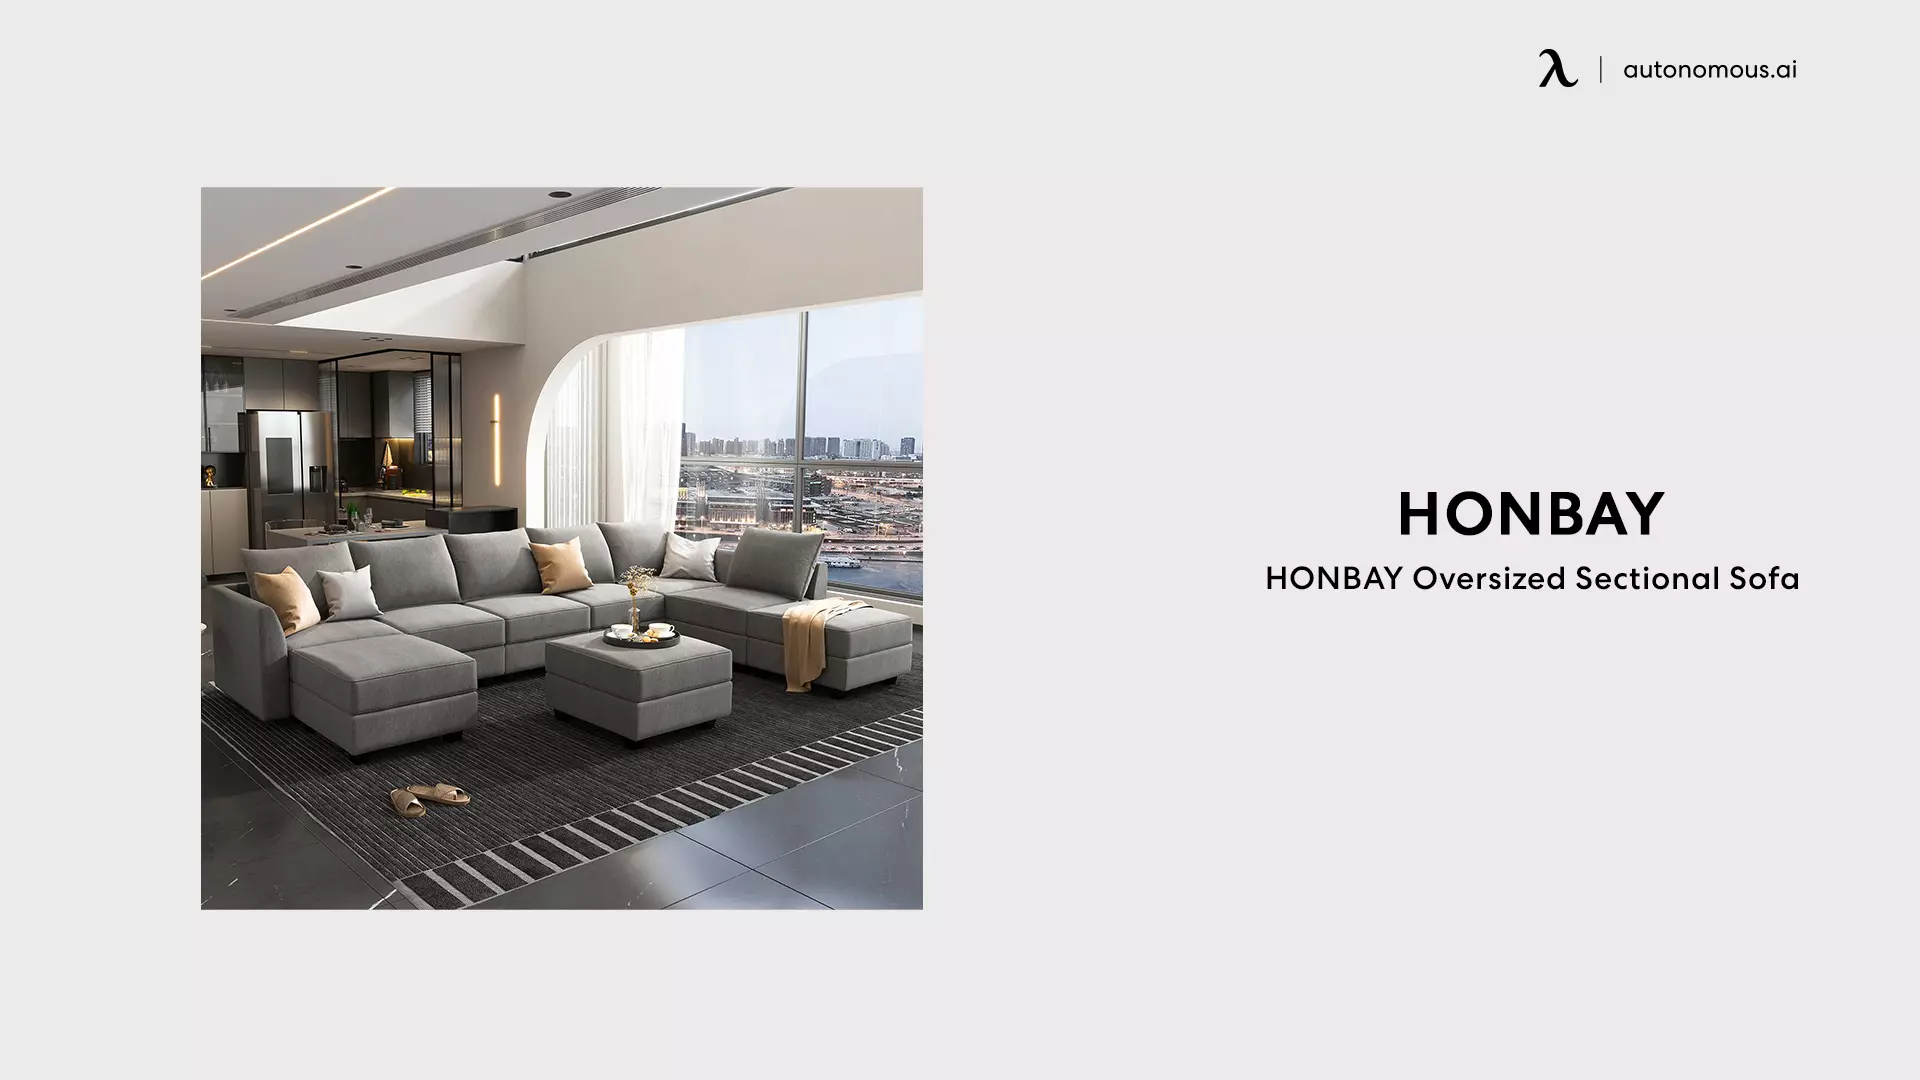 HONBAY Oversized Sectional Sofa